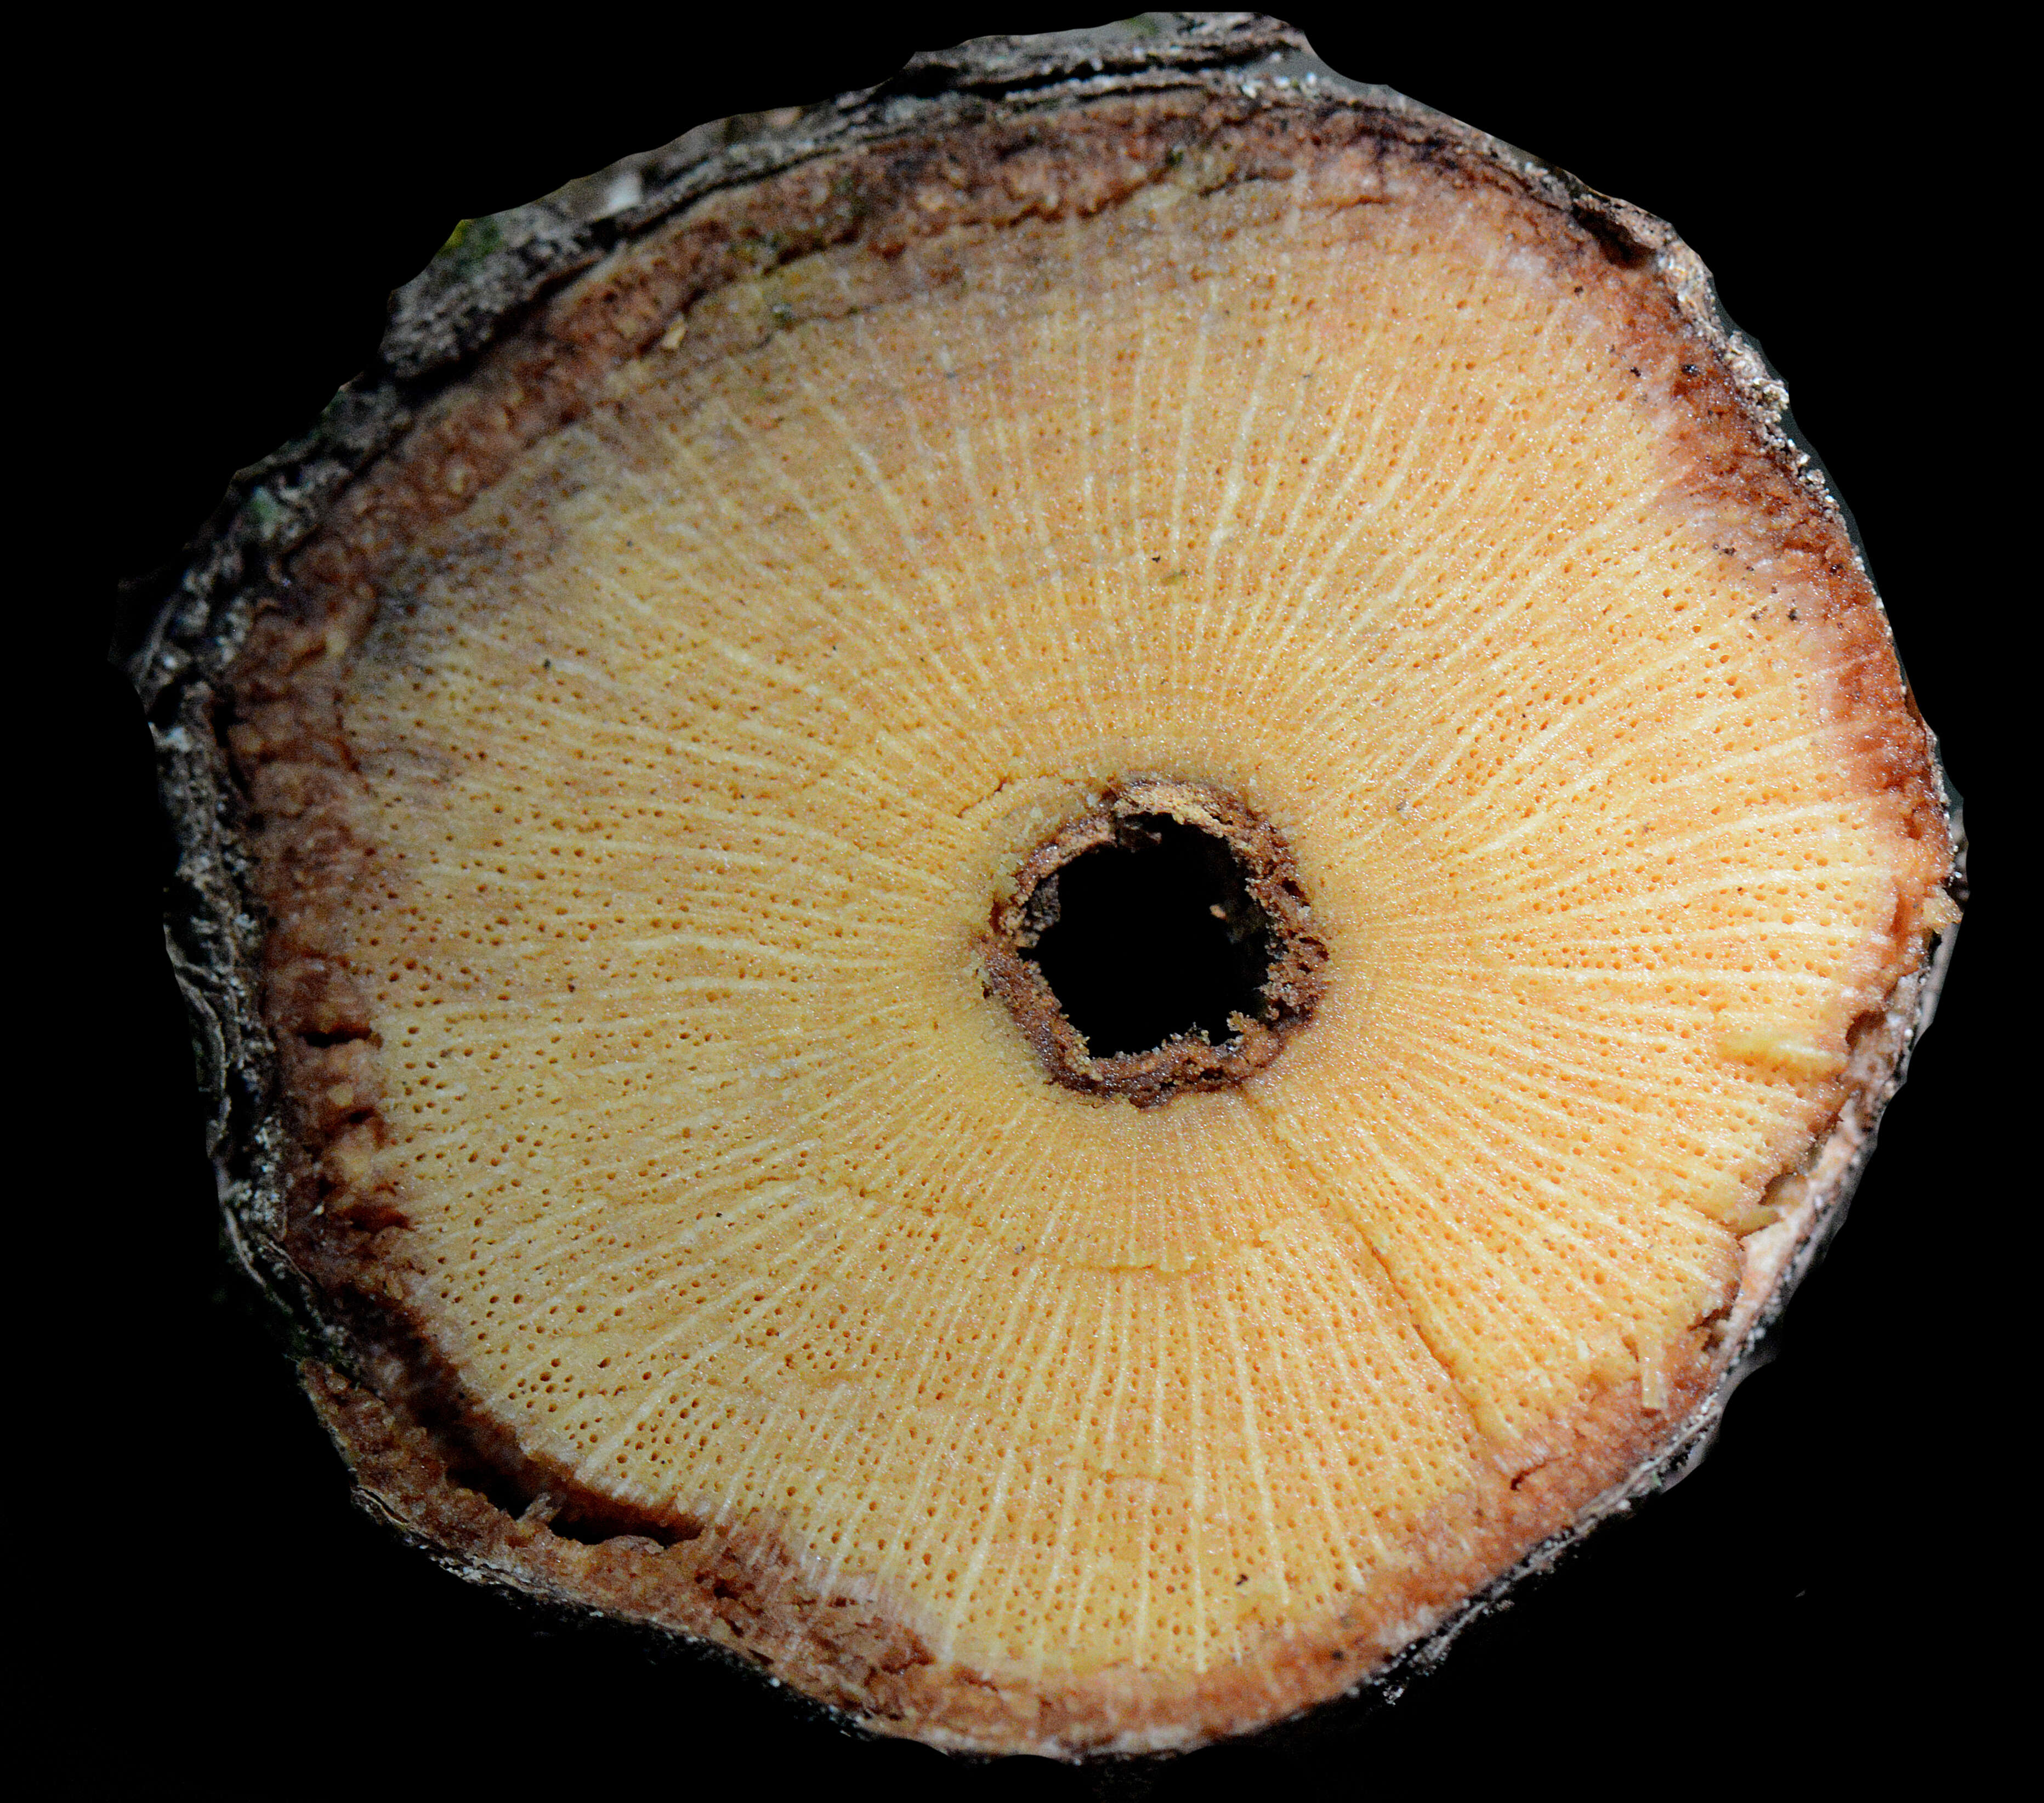 Image of Dilleniaceae